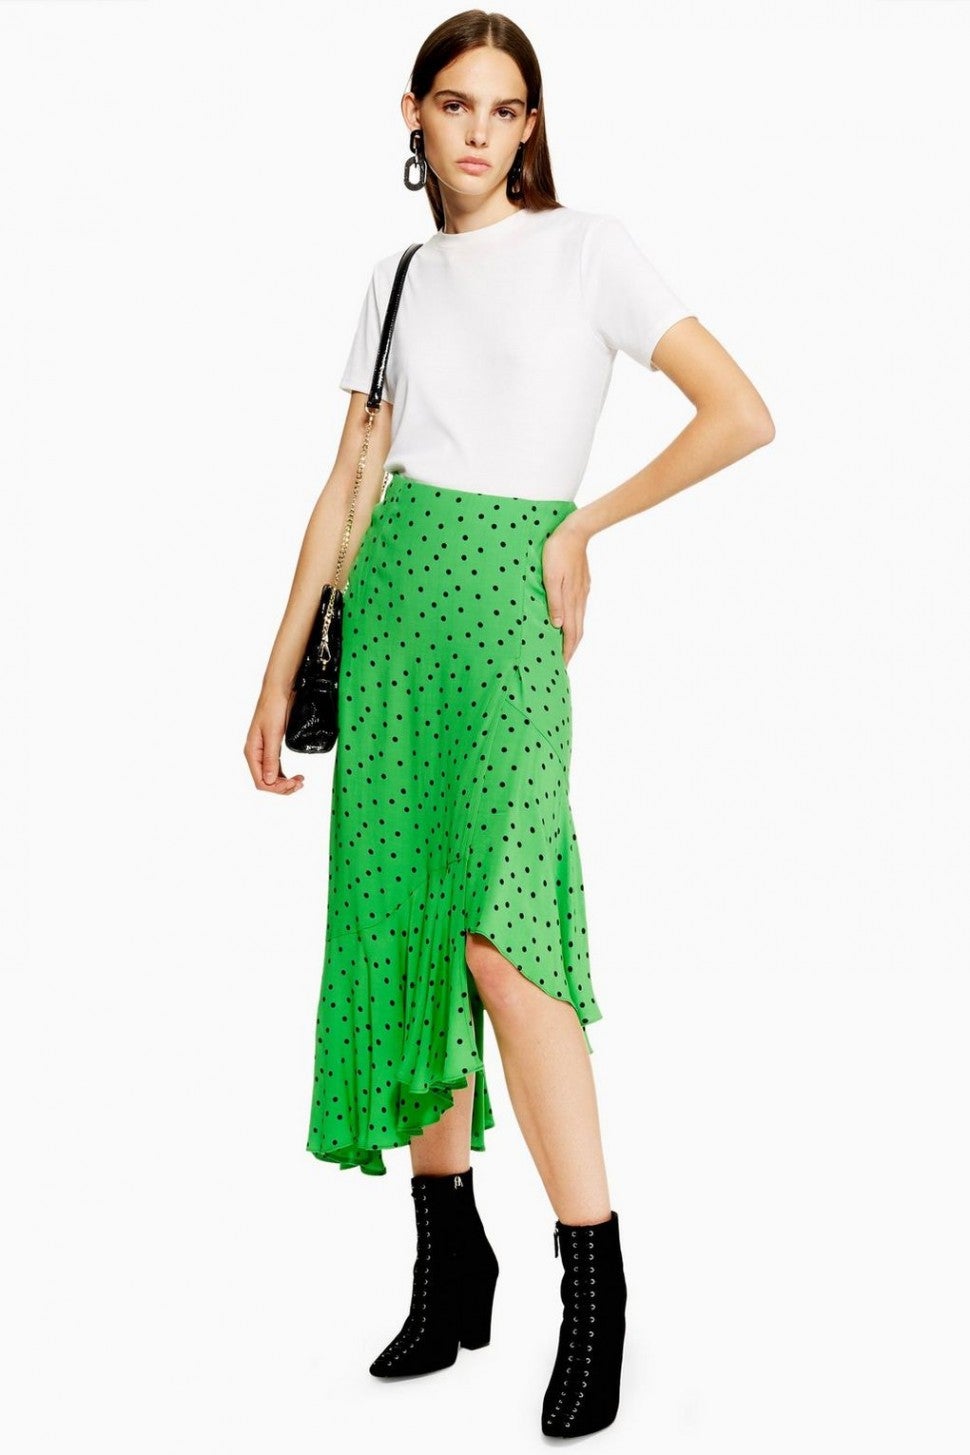 Topshop polka dot green skirt